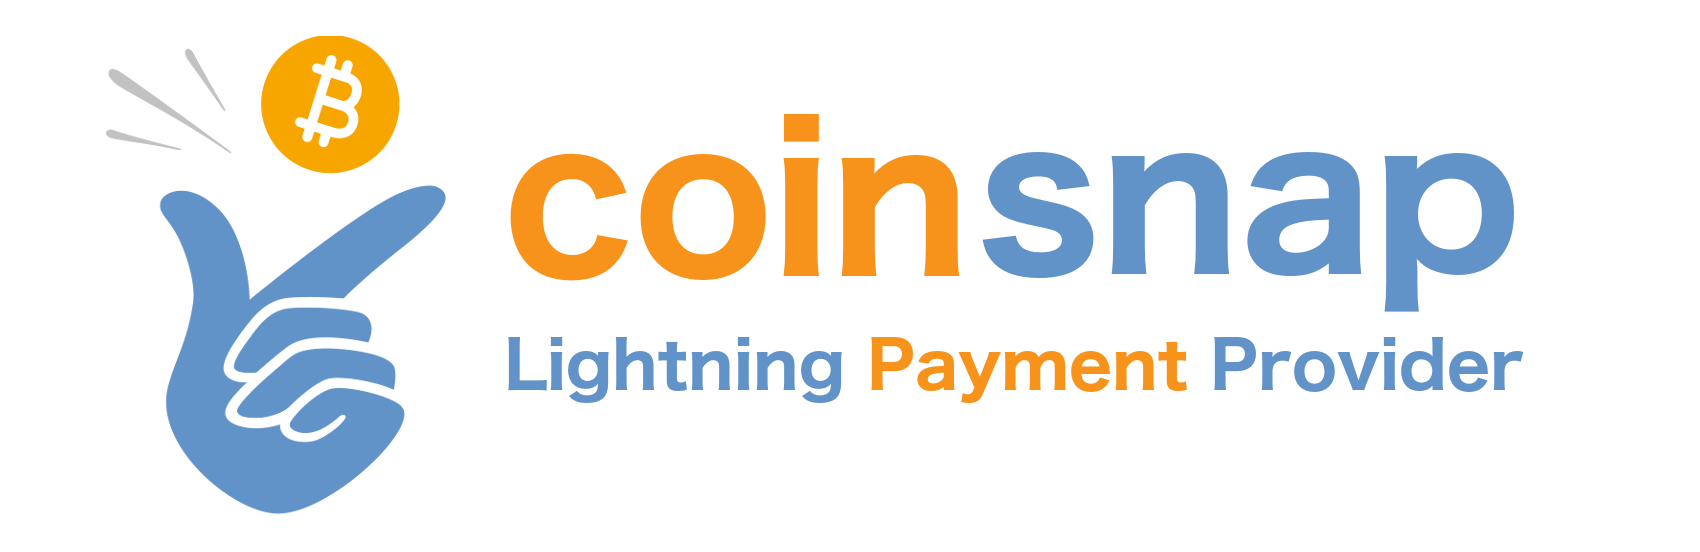 Coinsnap - Lightning Payment Provider